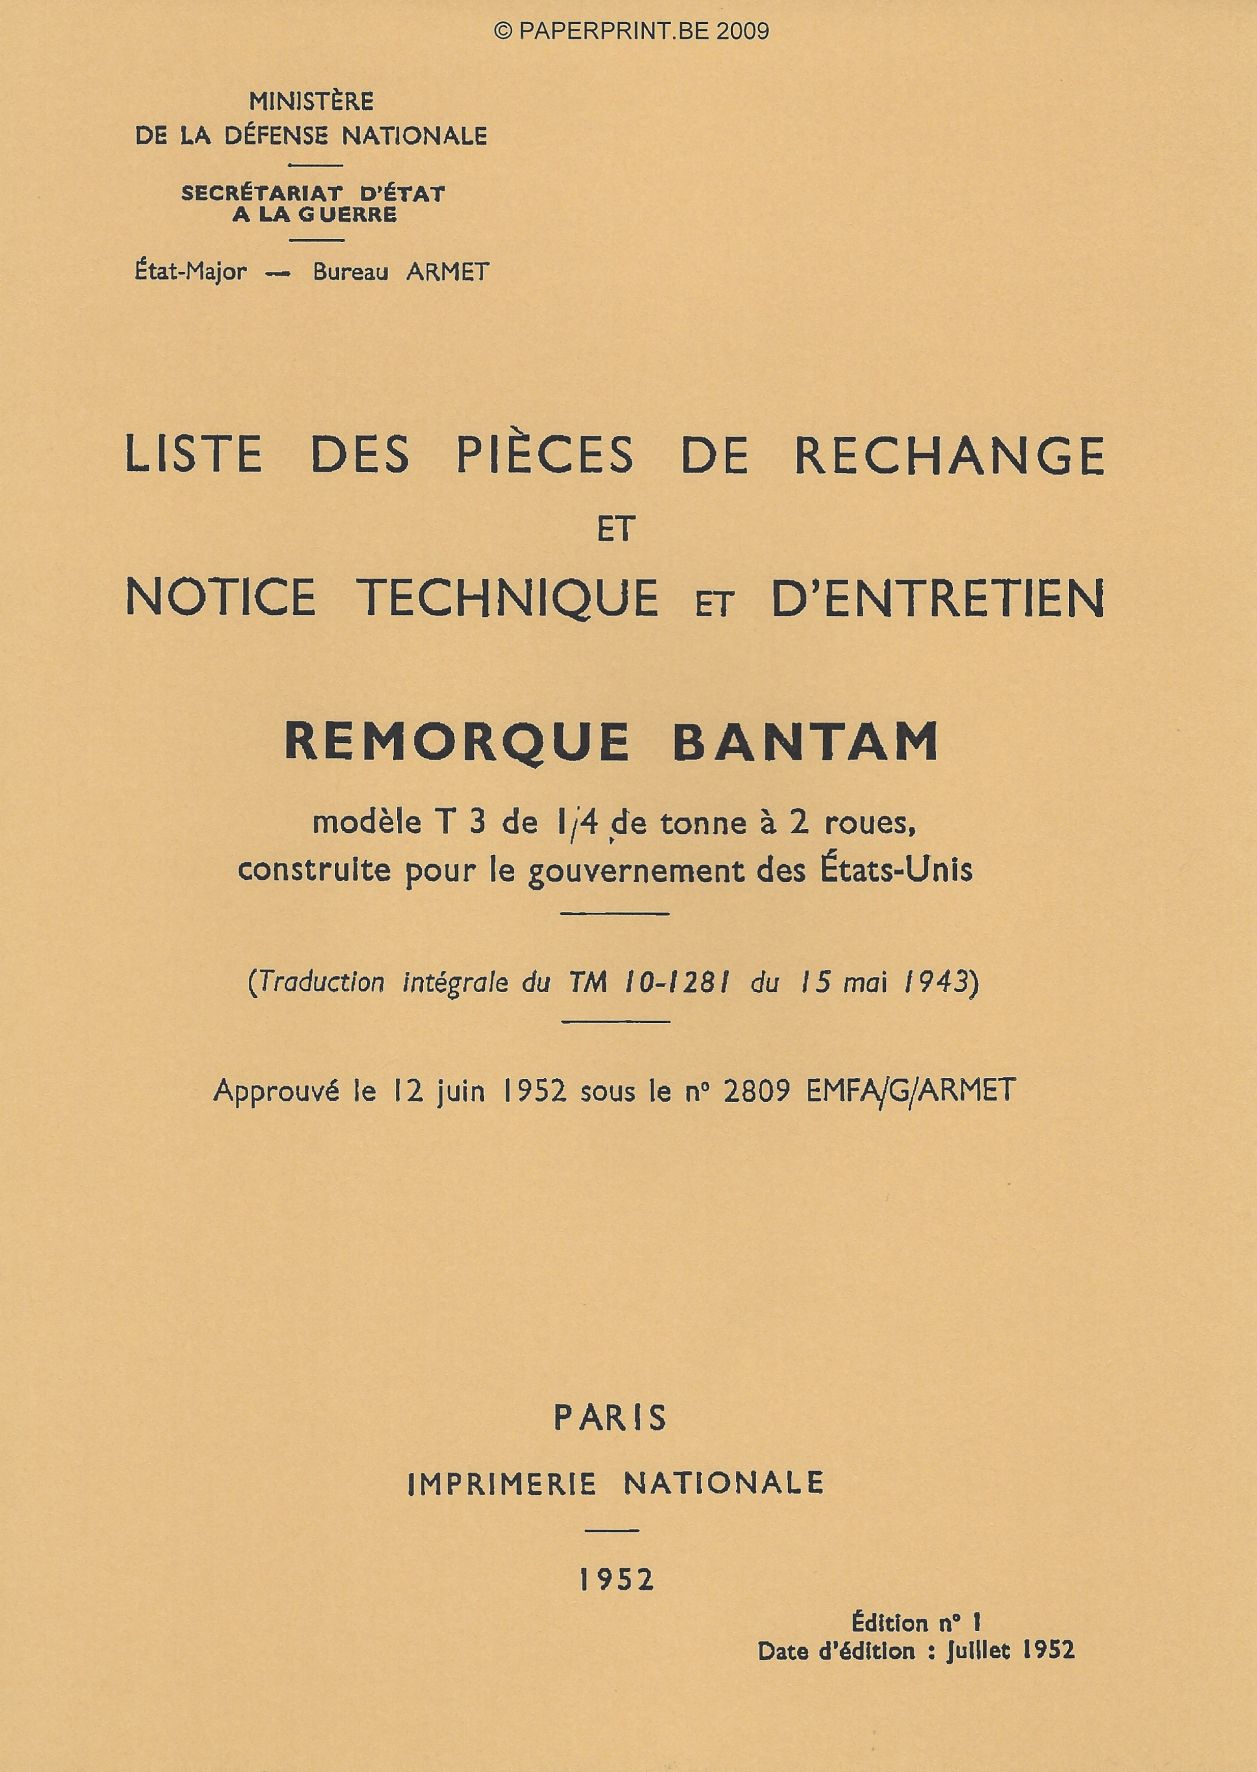 TM 10-1281 FR REMORQUE BANTAM MODEL T3 DE ¼ DE TONNE A 2 ROUES